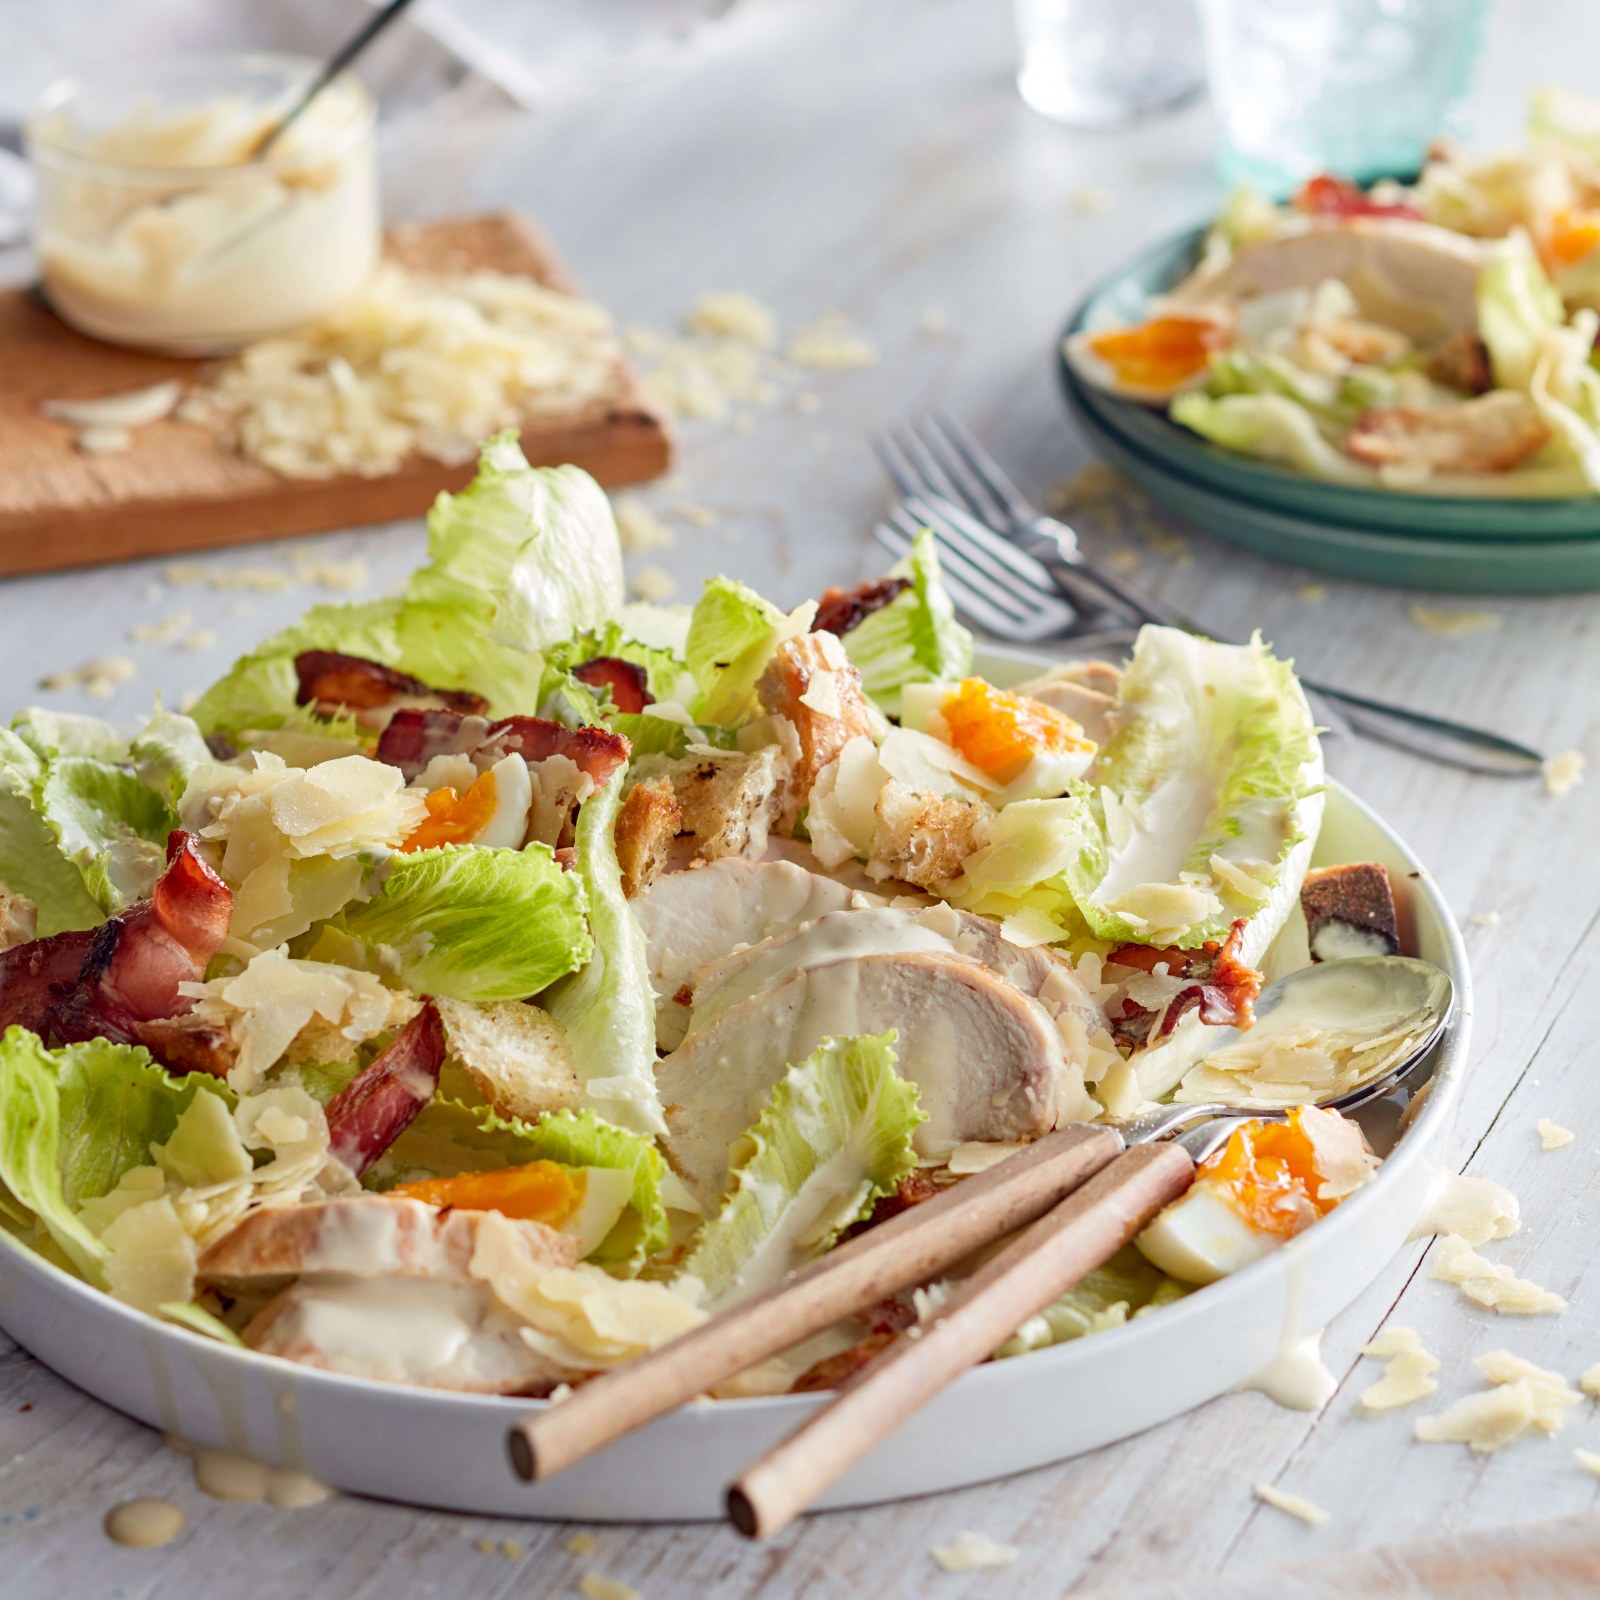 How to Keep Bagged Salad Fresh Longer